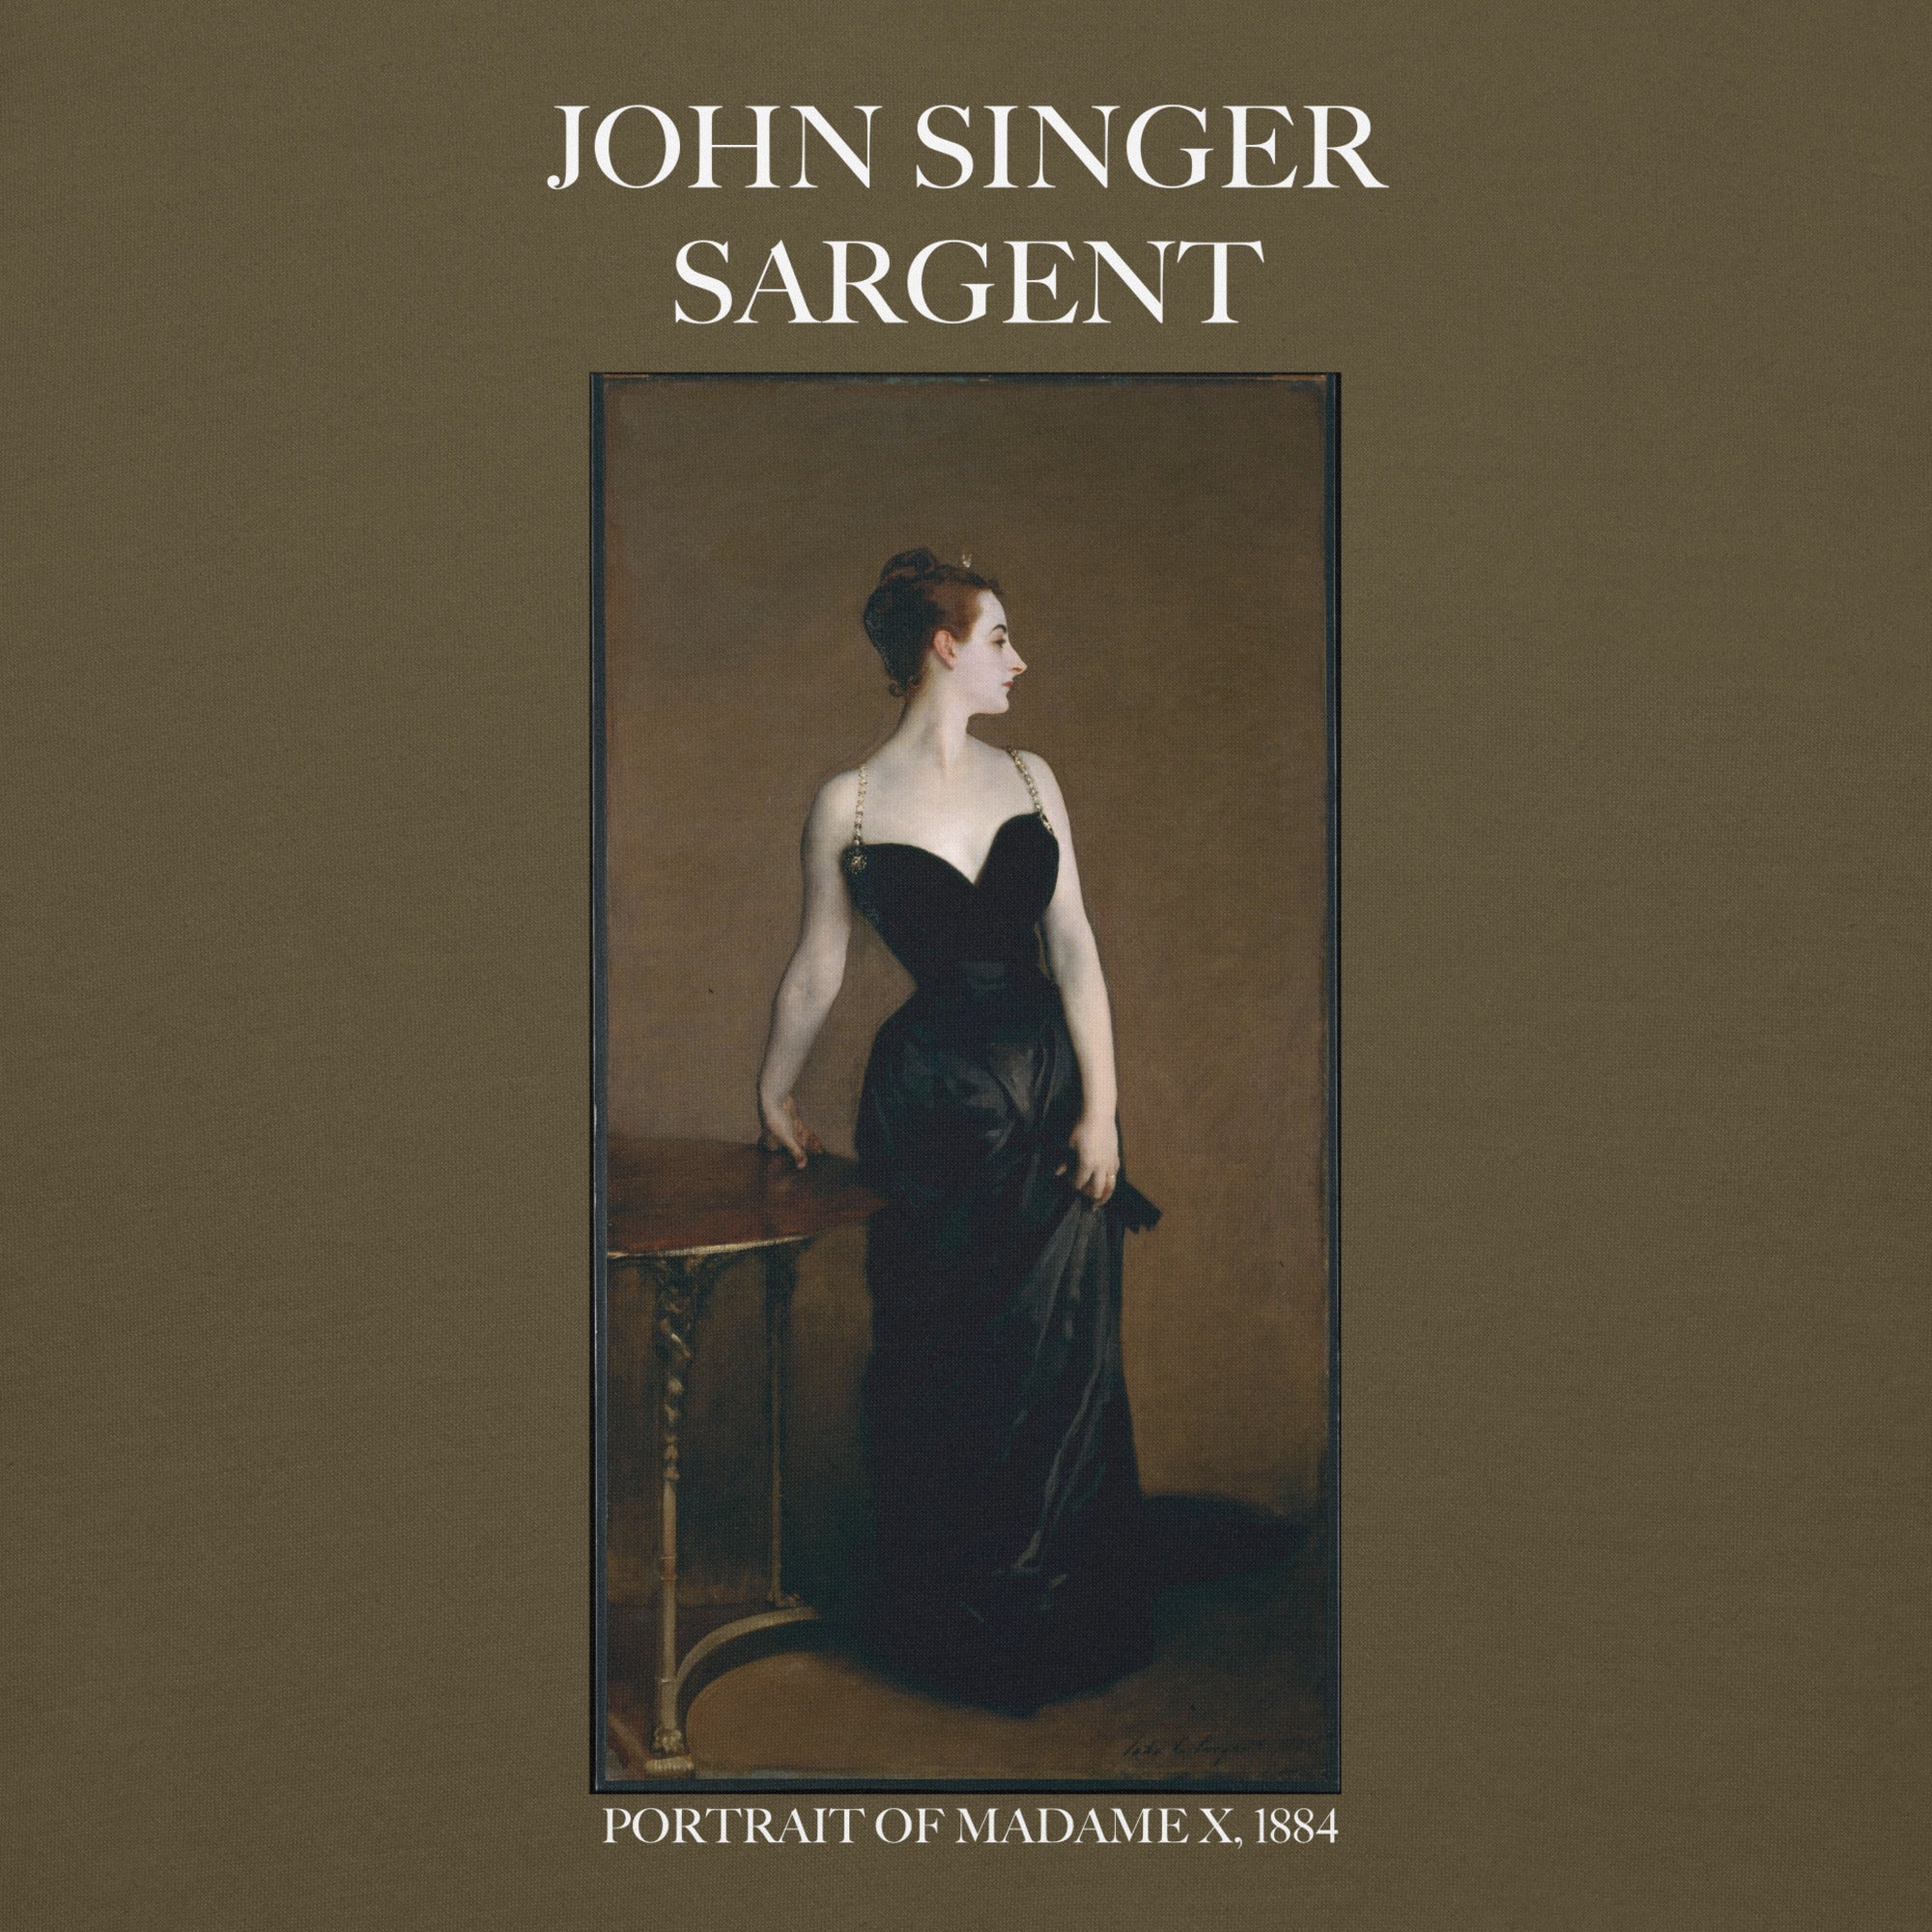 John Singer Sargent 'Portrait of Madame X' Famous Painting Hoodie | Unisex Premium Art Hoodie